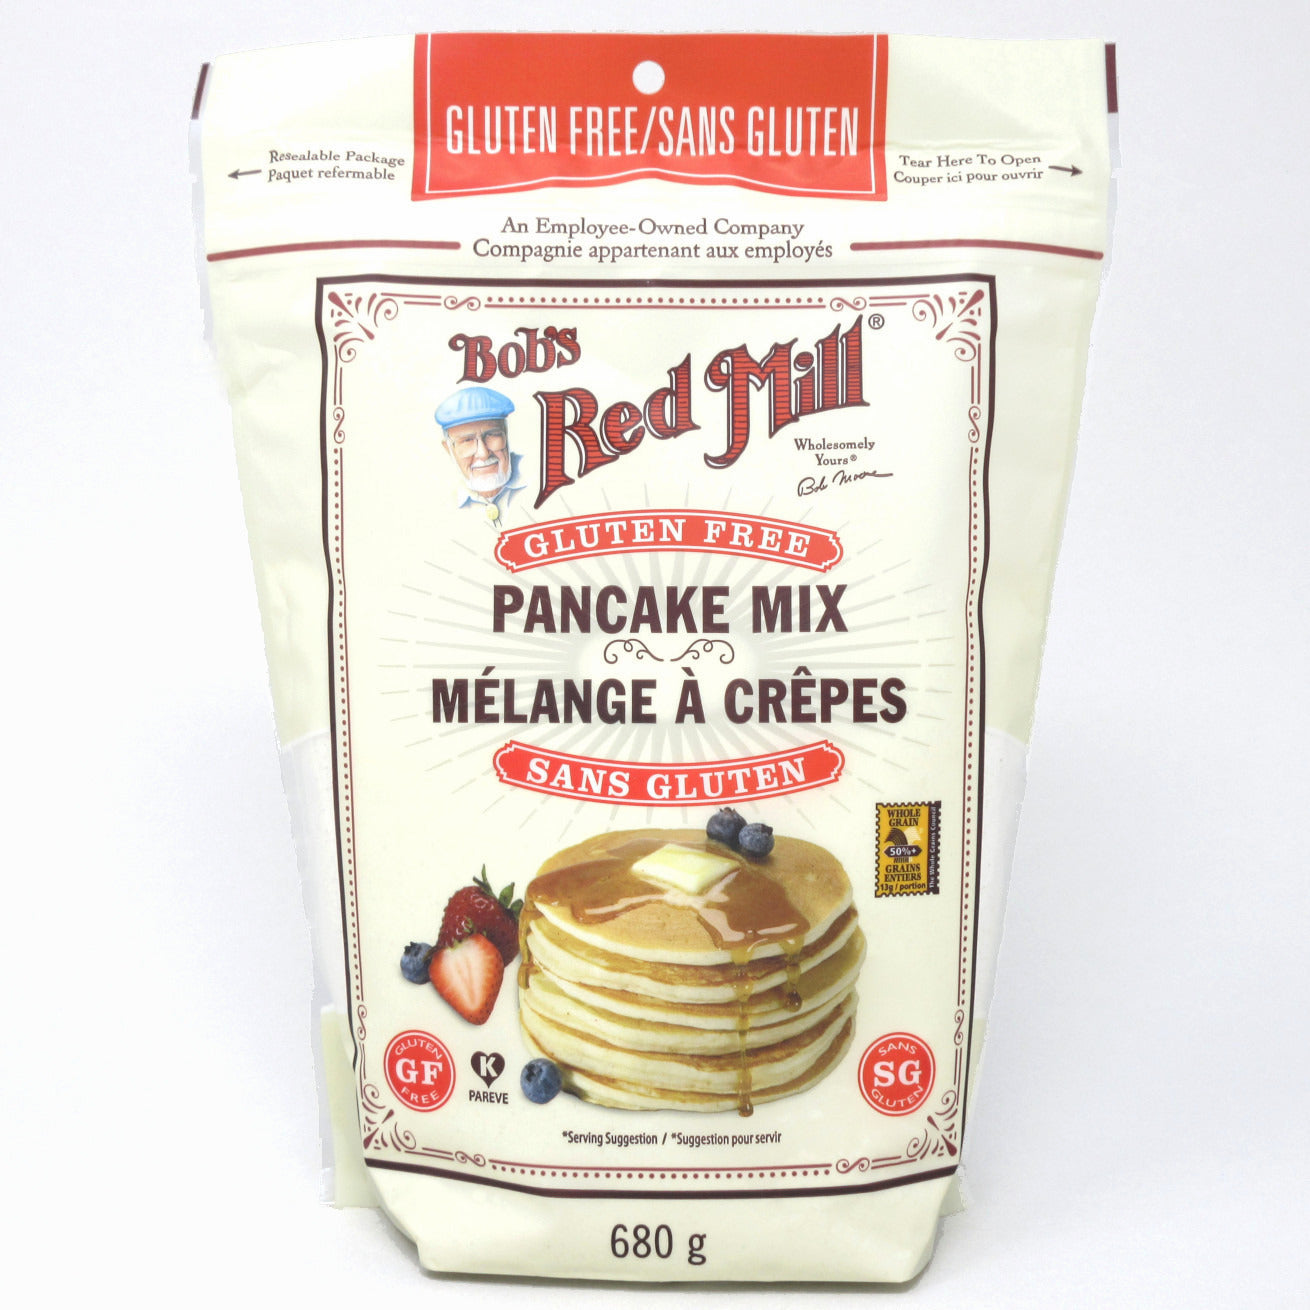 Flour Barrel product image - Bob's Red Mill Gluten Free Pancake Mix